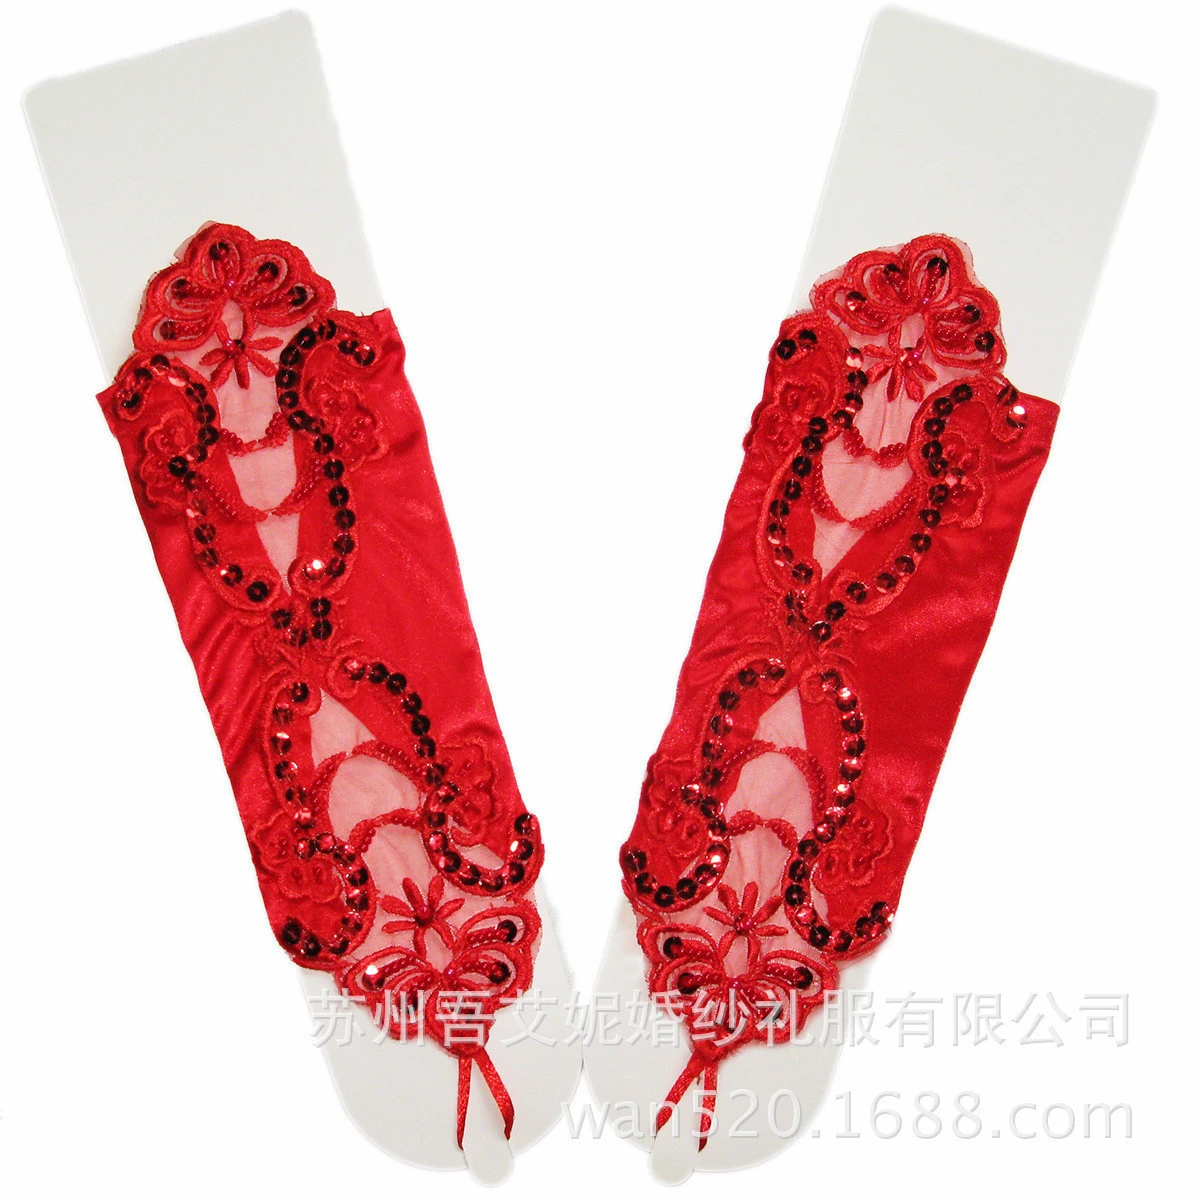 30cm length bride dress Accessories beads sequins decorative Simple Lace fingerless hollow satin wedding gloves